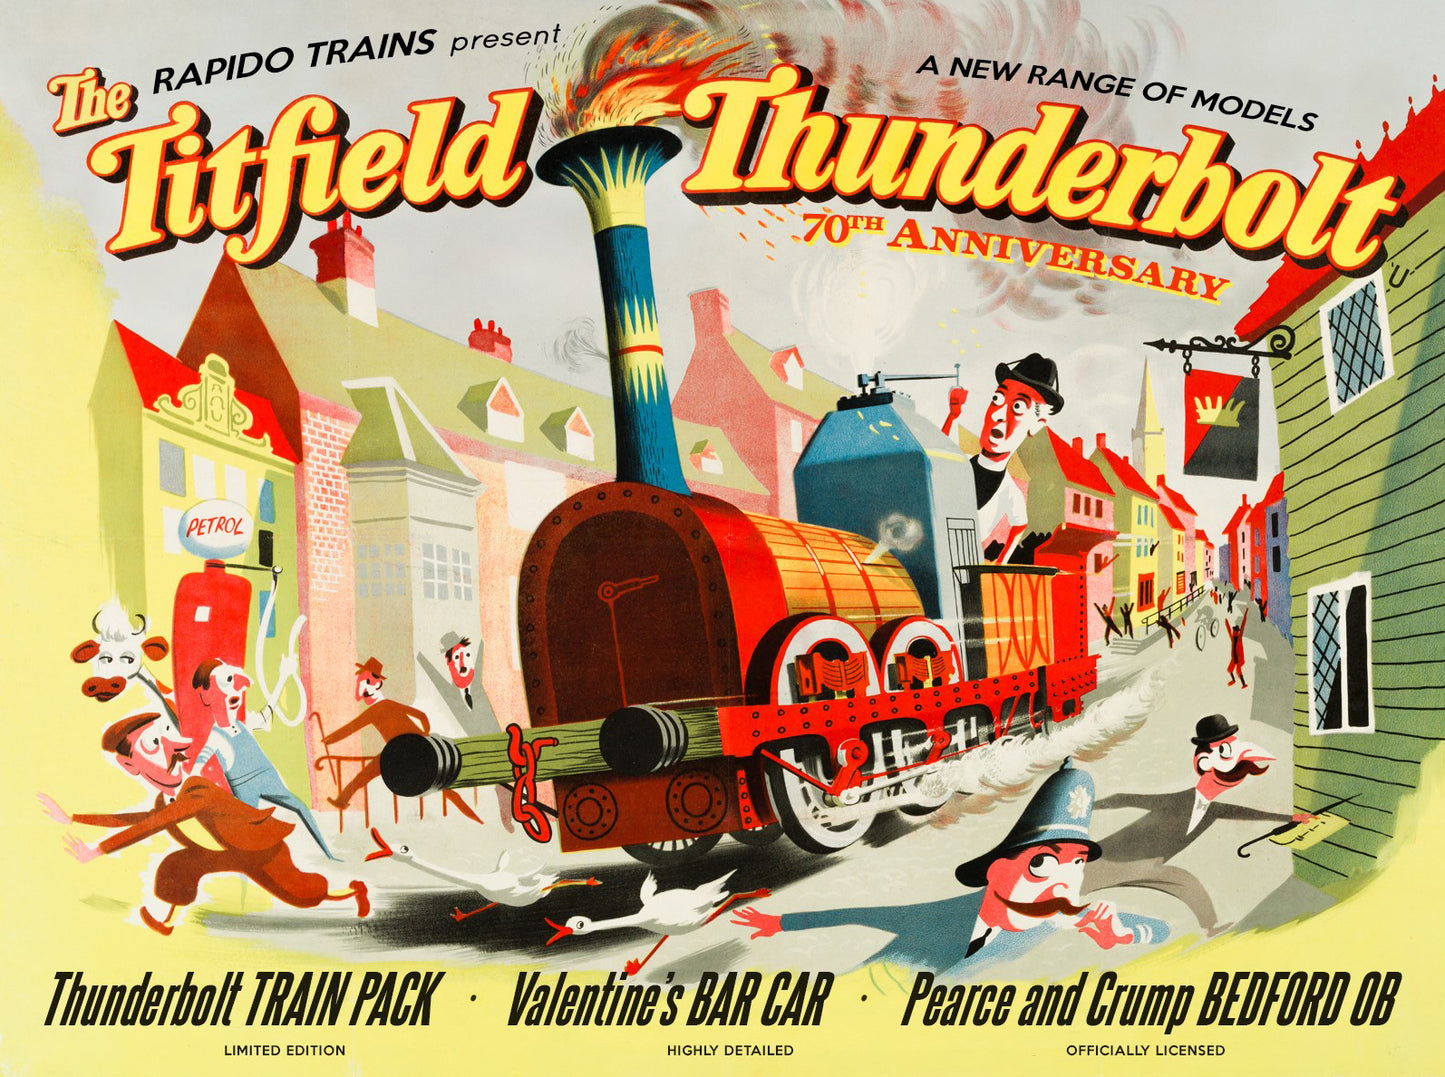 Rapido Trains UK 922002 - The Titfield Thunderbolt Train Pack Standard Pack DC/Silent